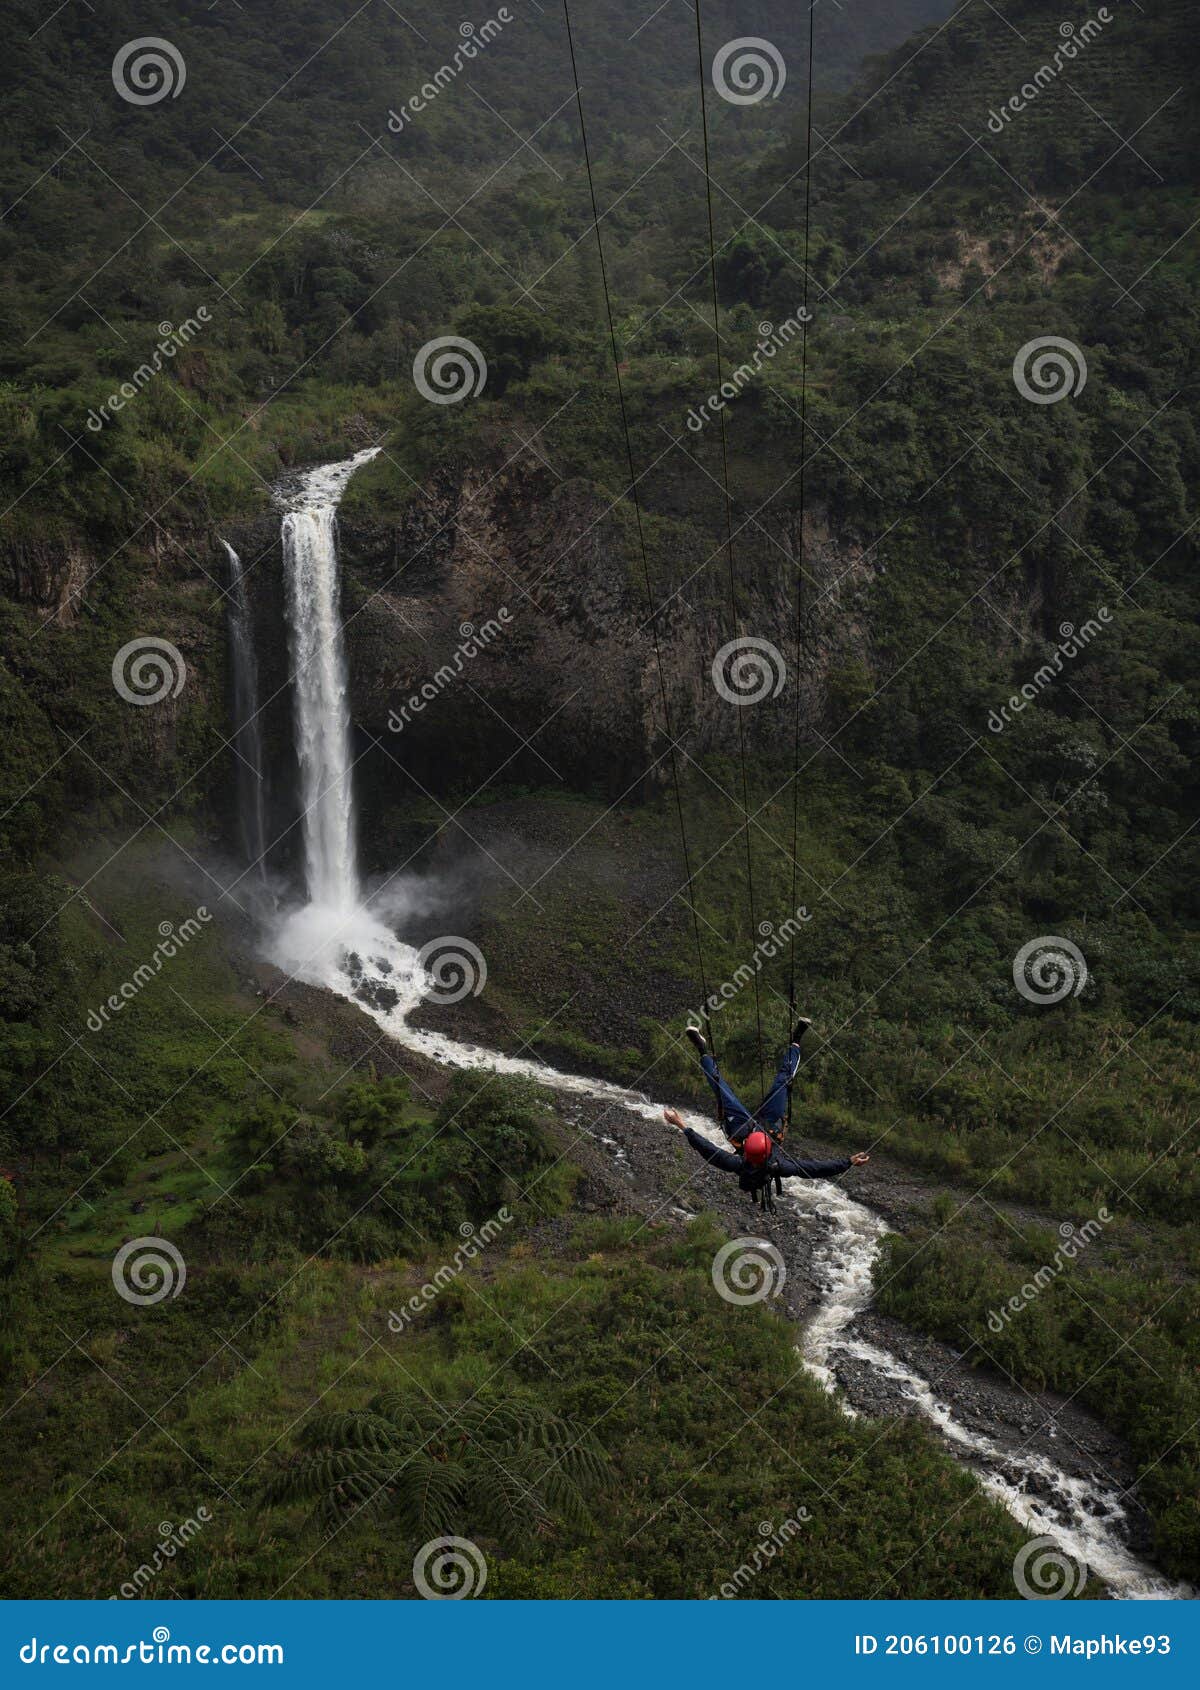 tourist on giant swing adventure ride at manto de la novia bridal veil waterfall pastaza river banos tungurahua ecuador